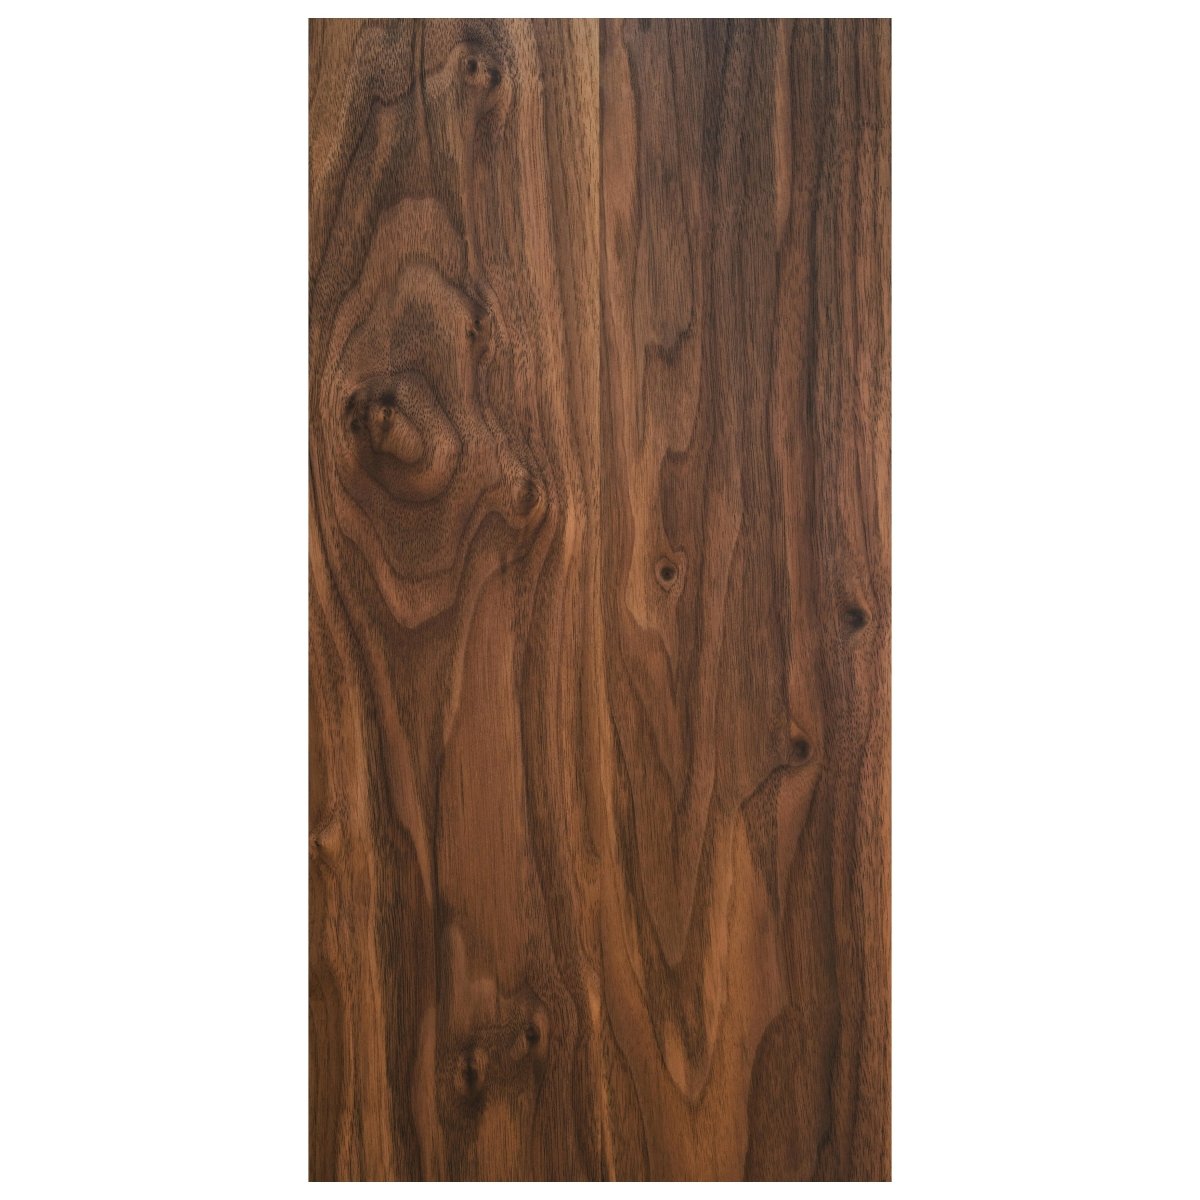 Türtapete Echtholz Muster, Maserung, Holz M1235 - Bild 2